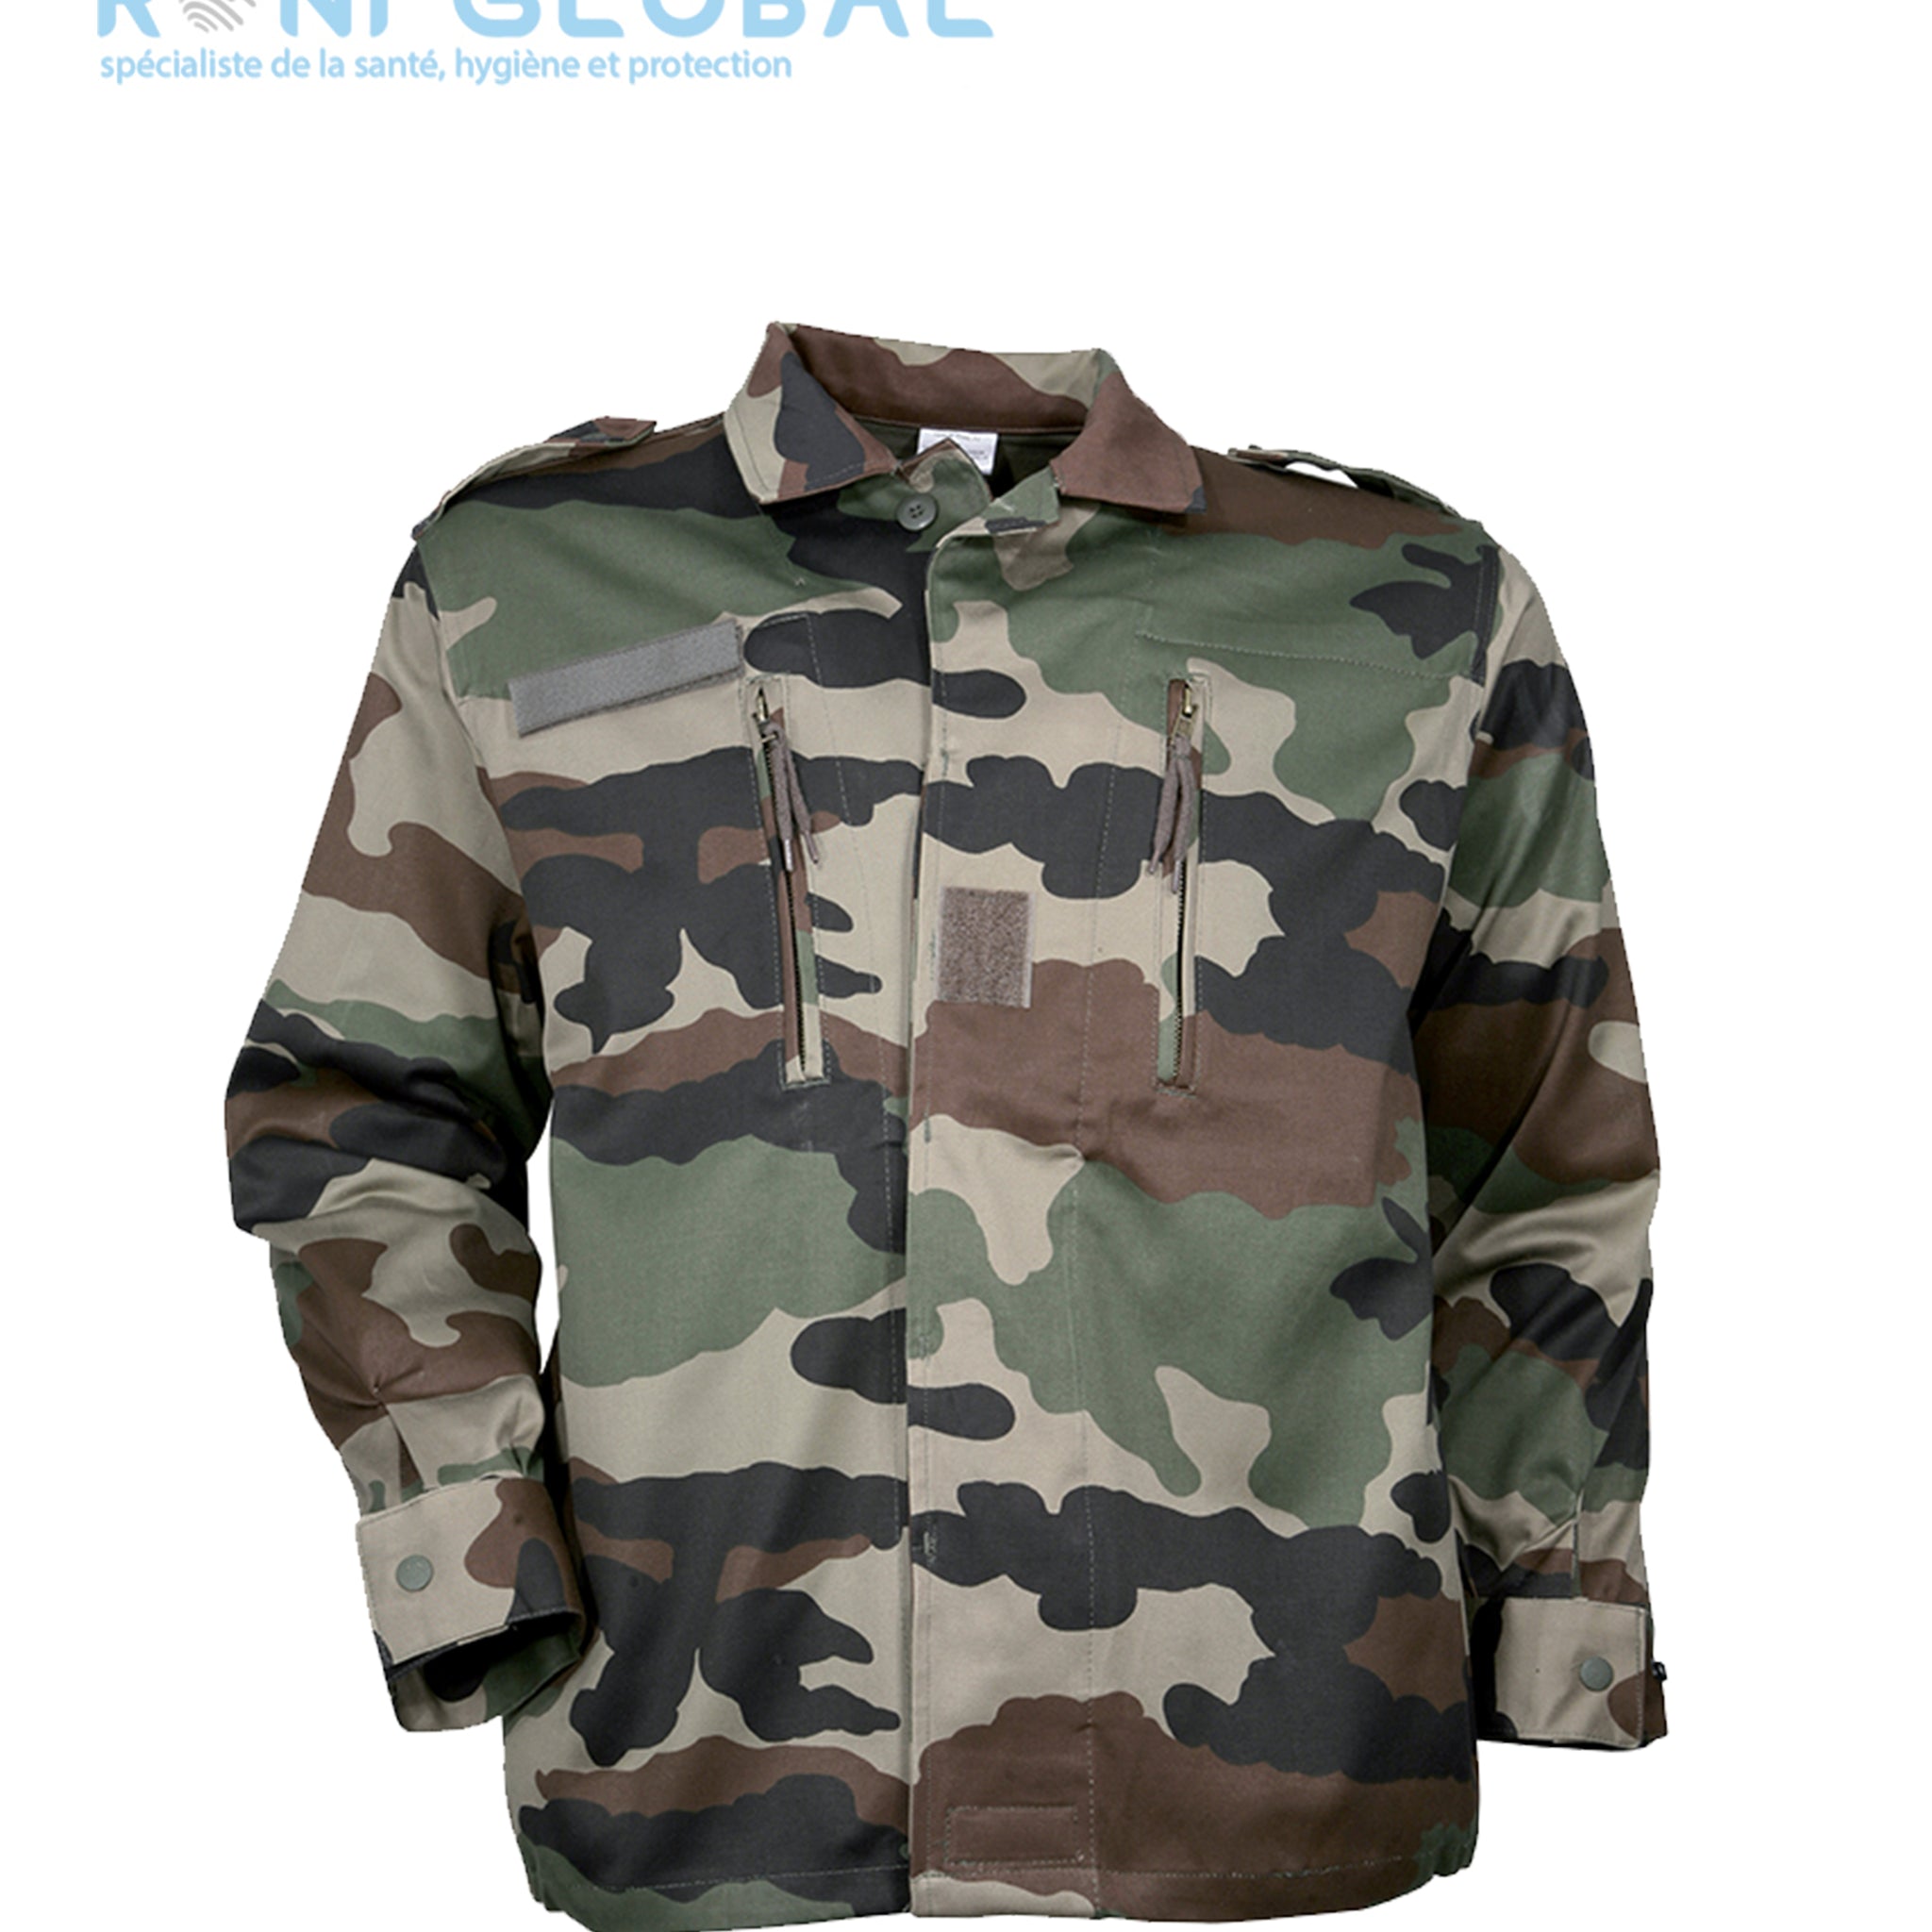 Veste camouflage type militaire en coton et polyester 2 poches - F2 CAMO 2 POCHES CITYGUARD